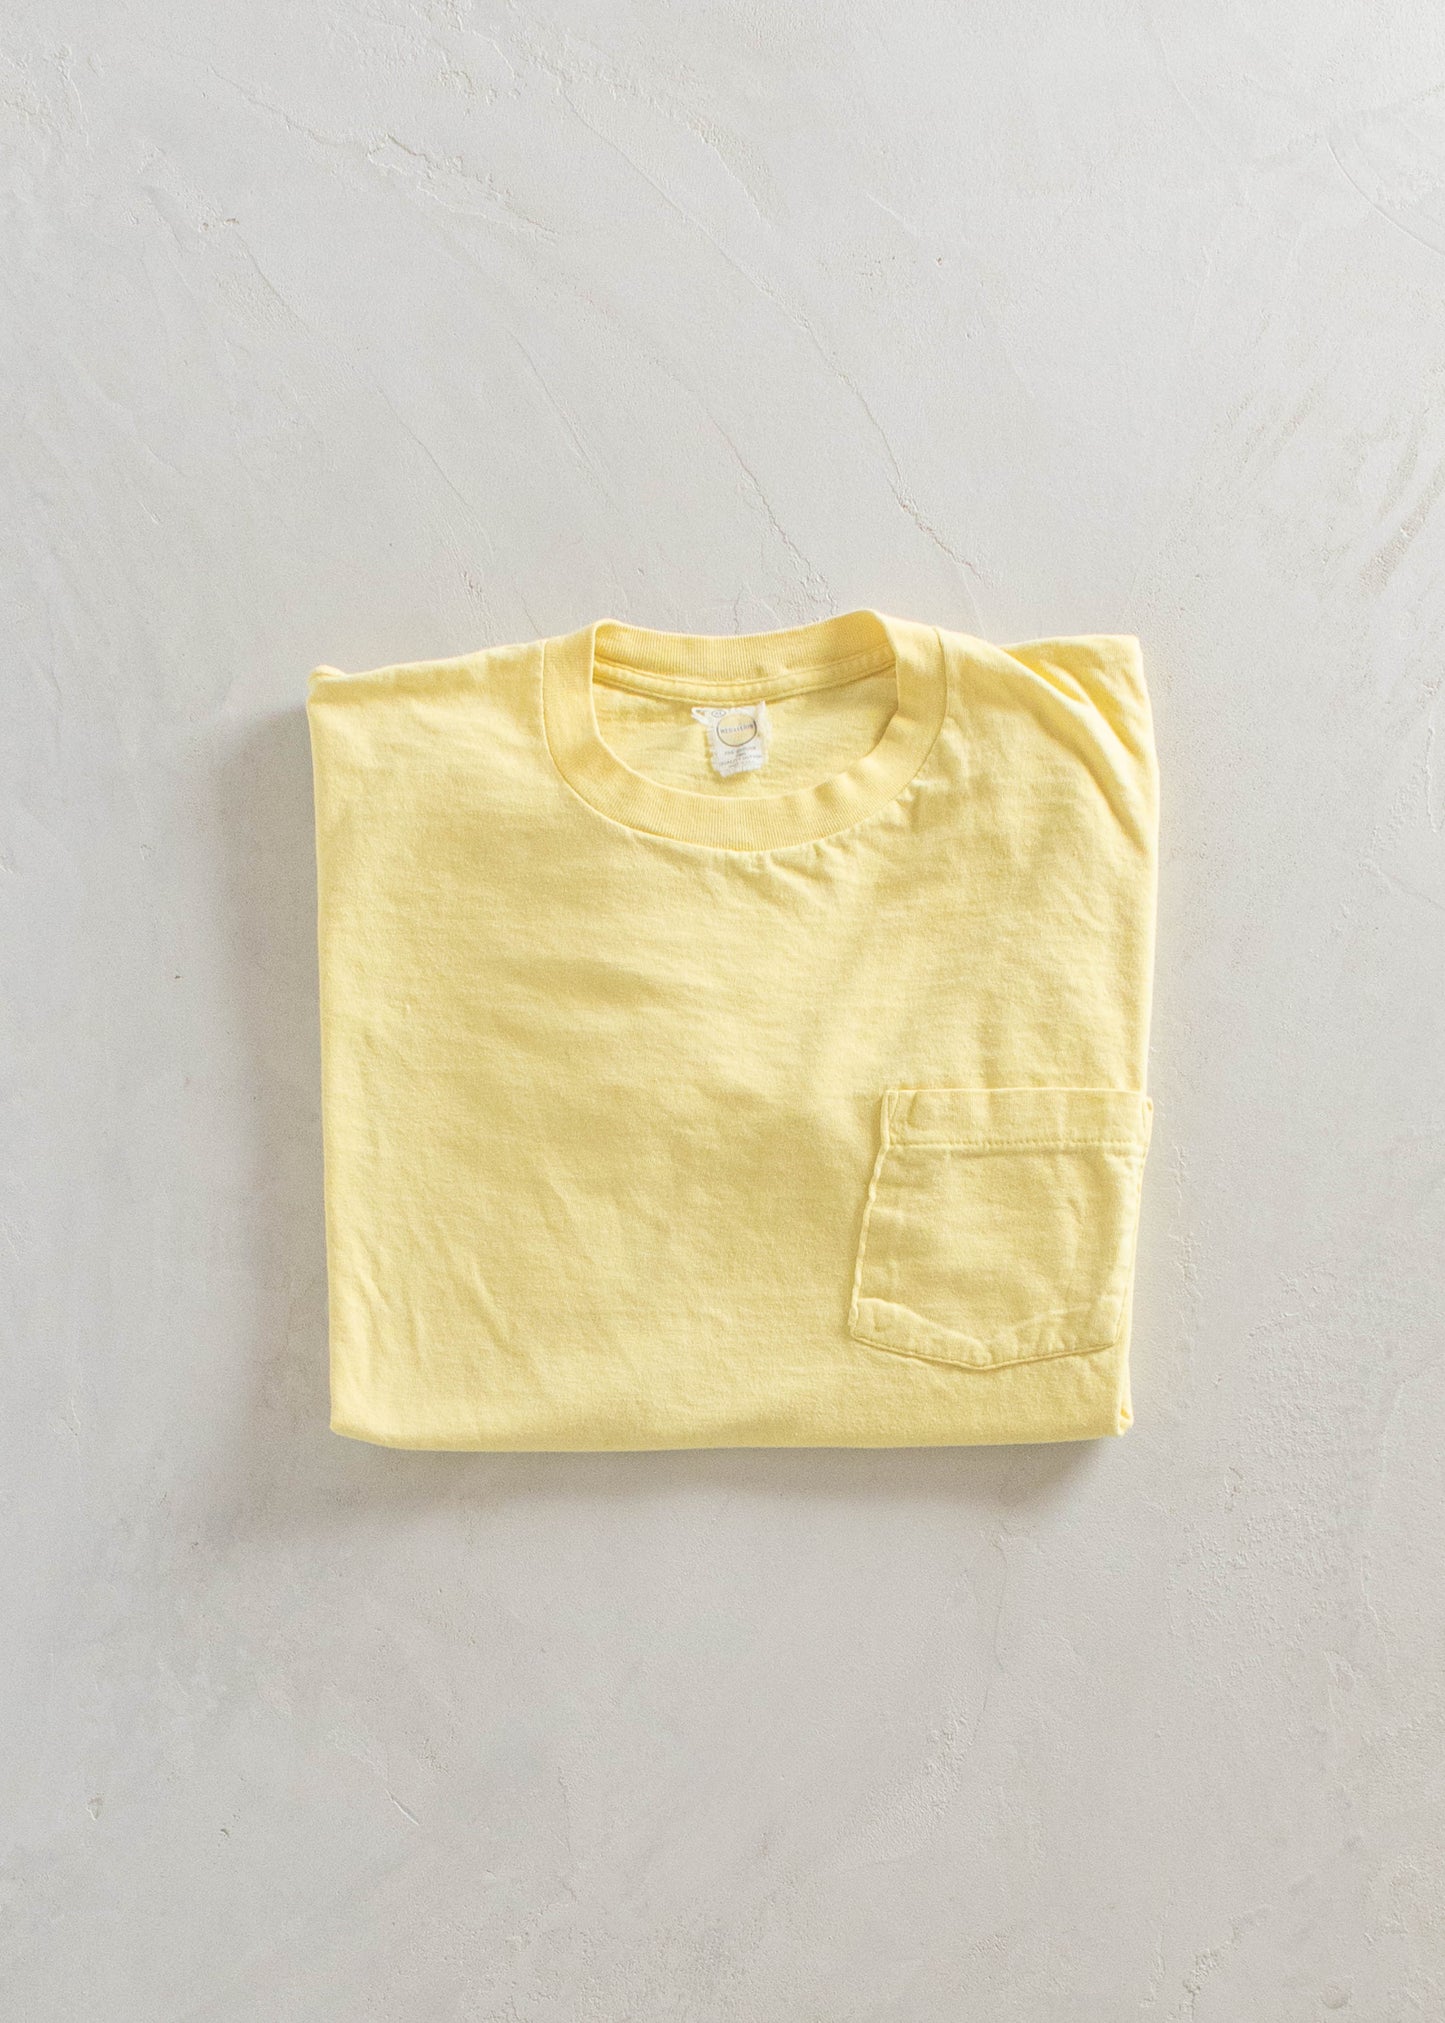 1980s Medallion Selvedge Pocket T-Shirt Size XL/2XL